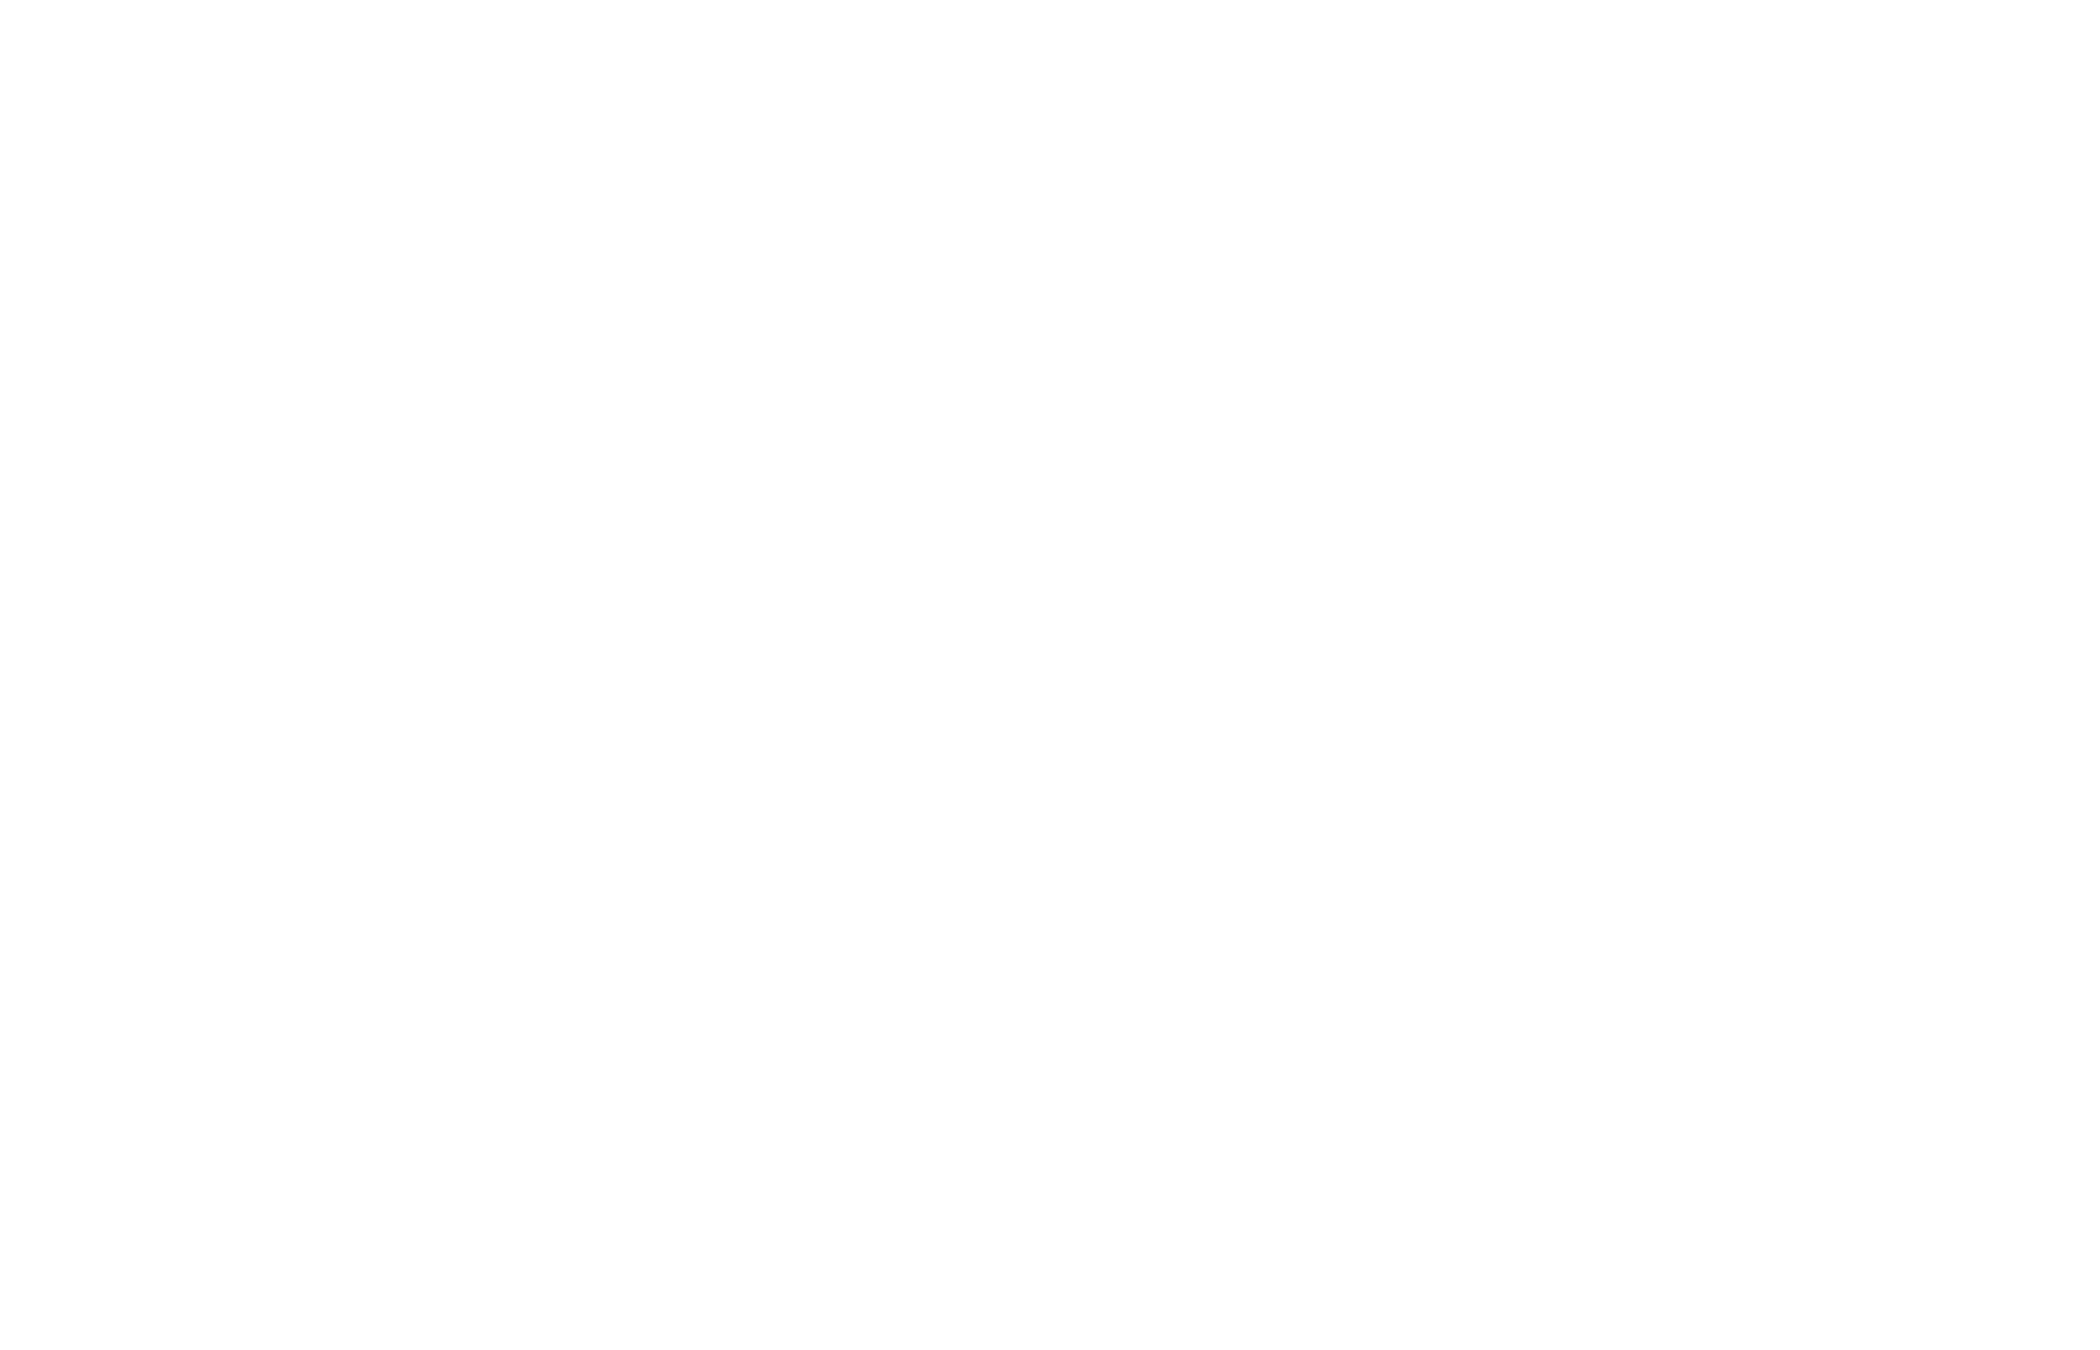 Mother Earth Organic Mushrooms